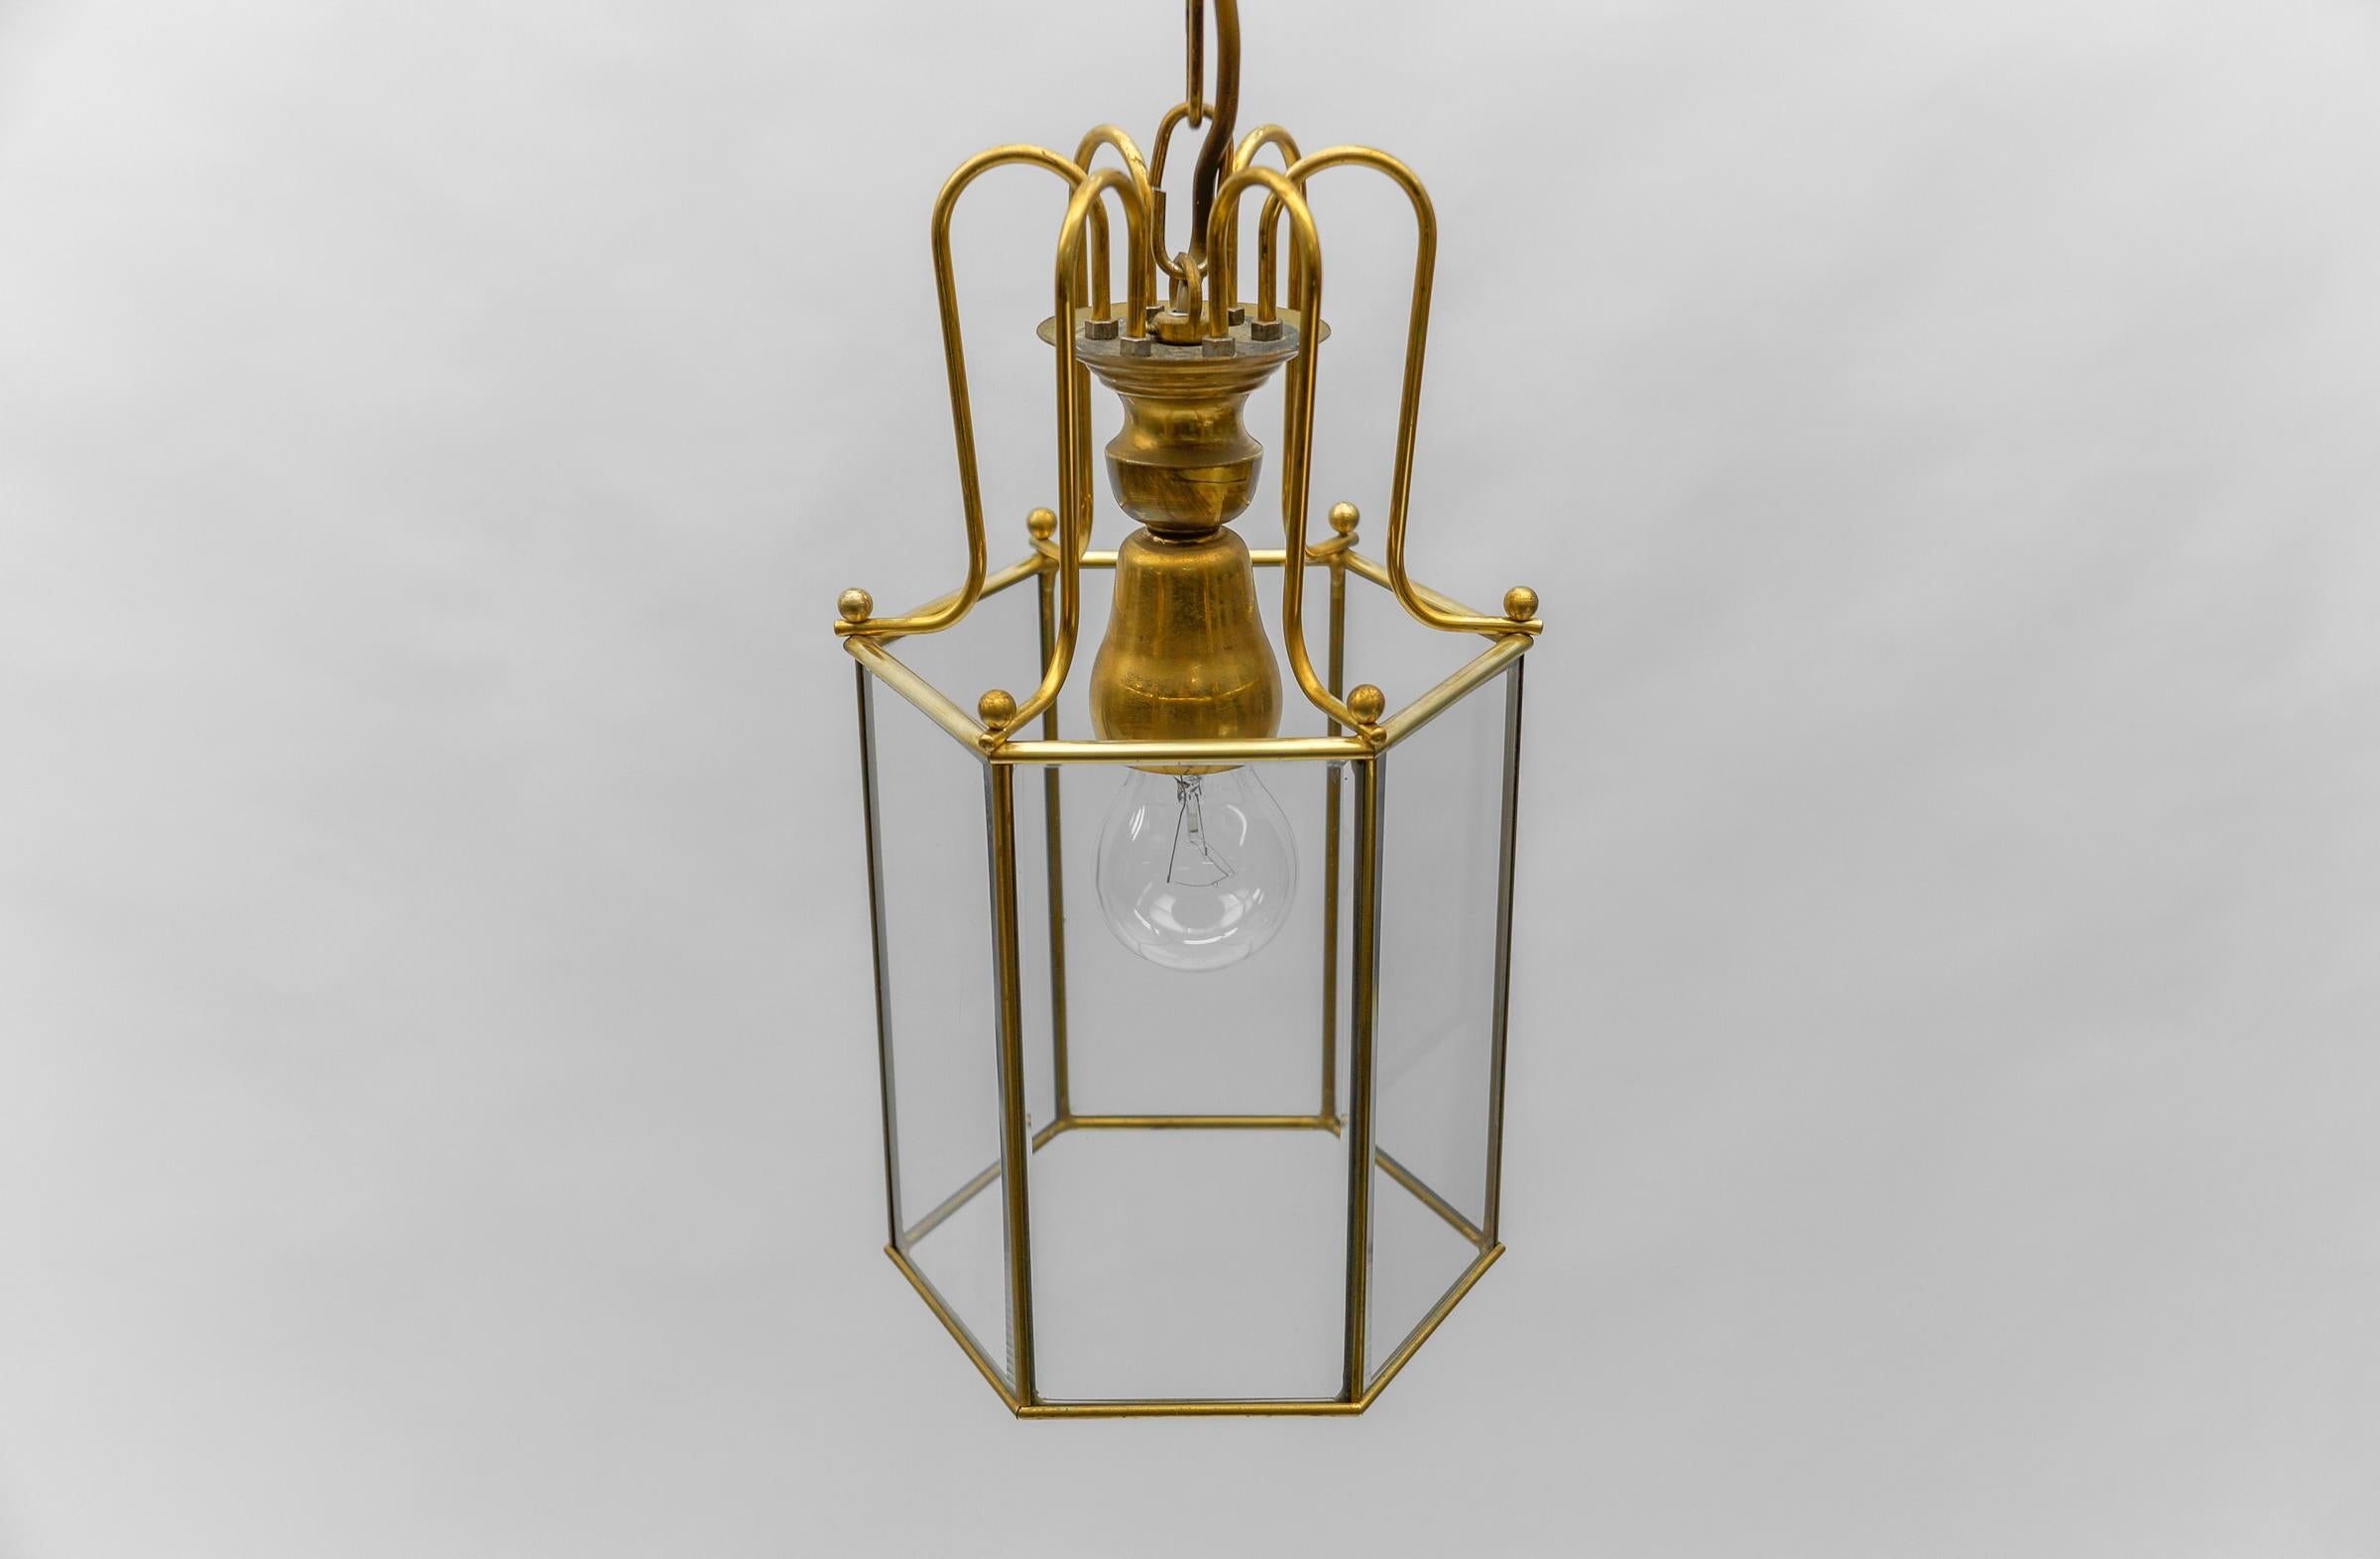 Metal Art Deco Cut Glass Pendant Lamp in Brass, 1940s / 1950s For Sale